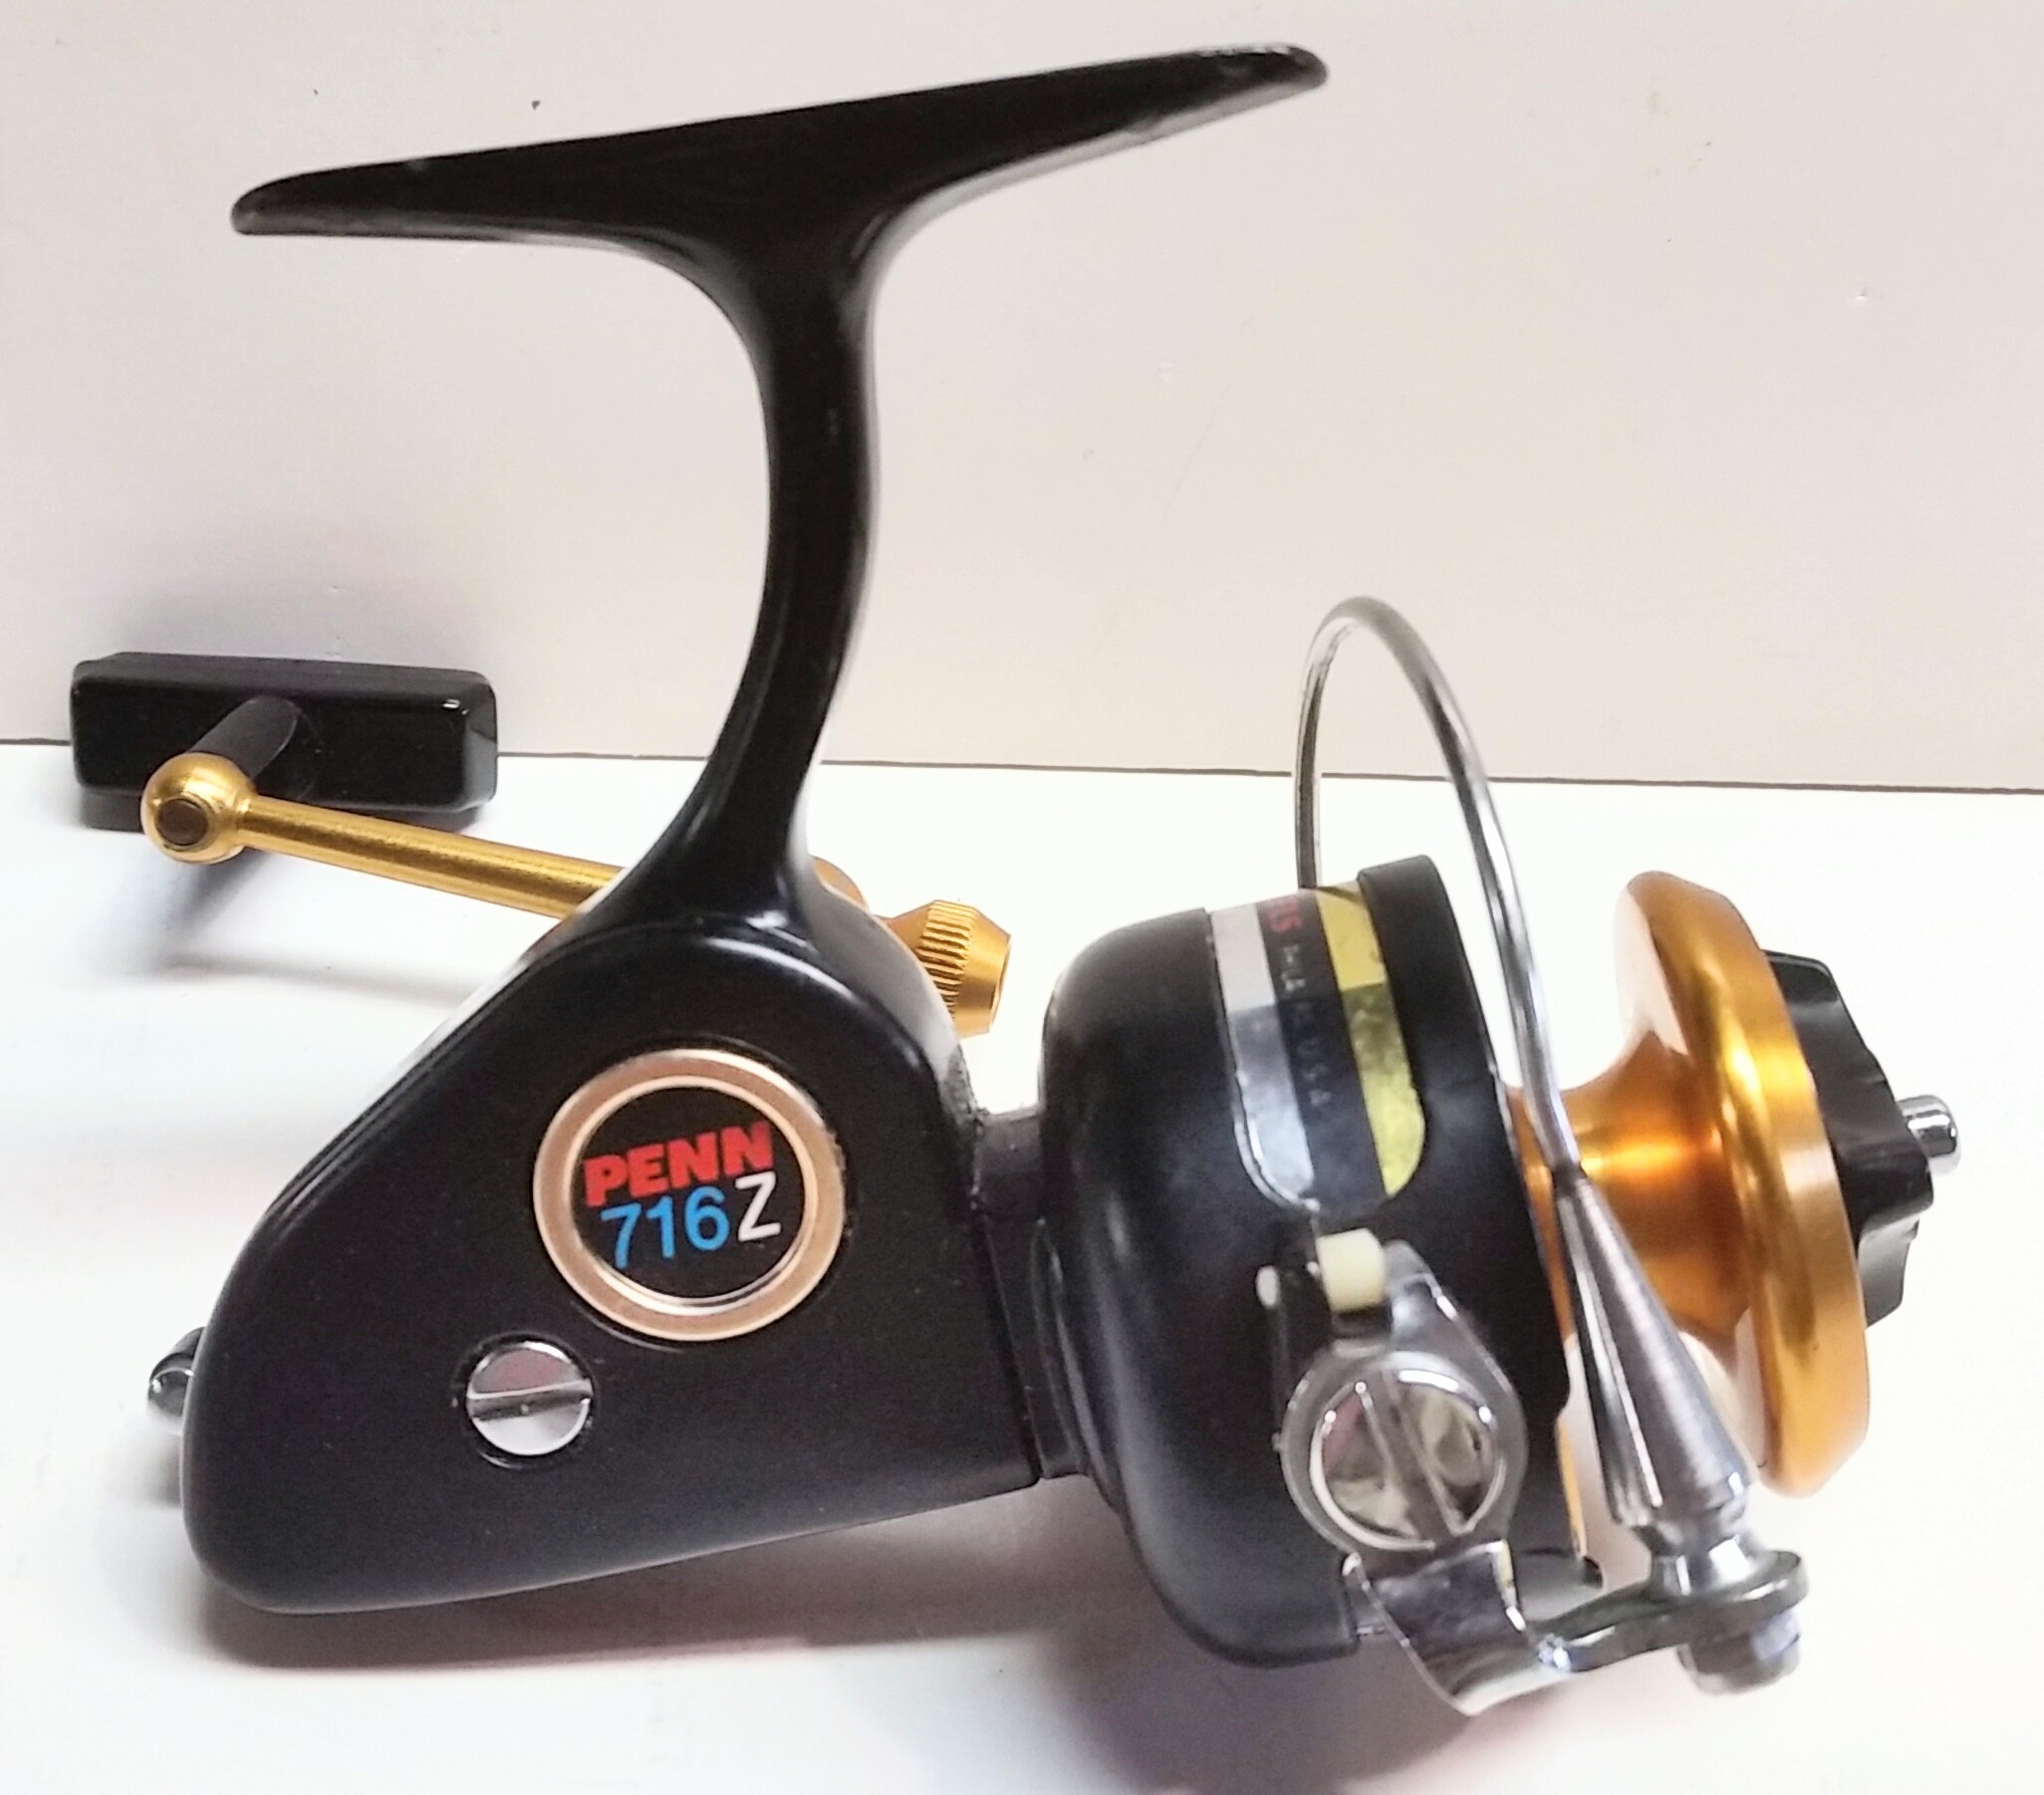 Penn 716z Ultralight spinning fishing reel USA, Sports Equipment, Fishing  on Carousell